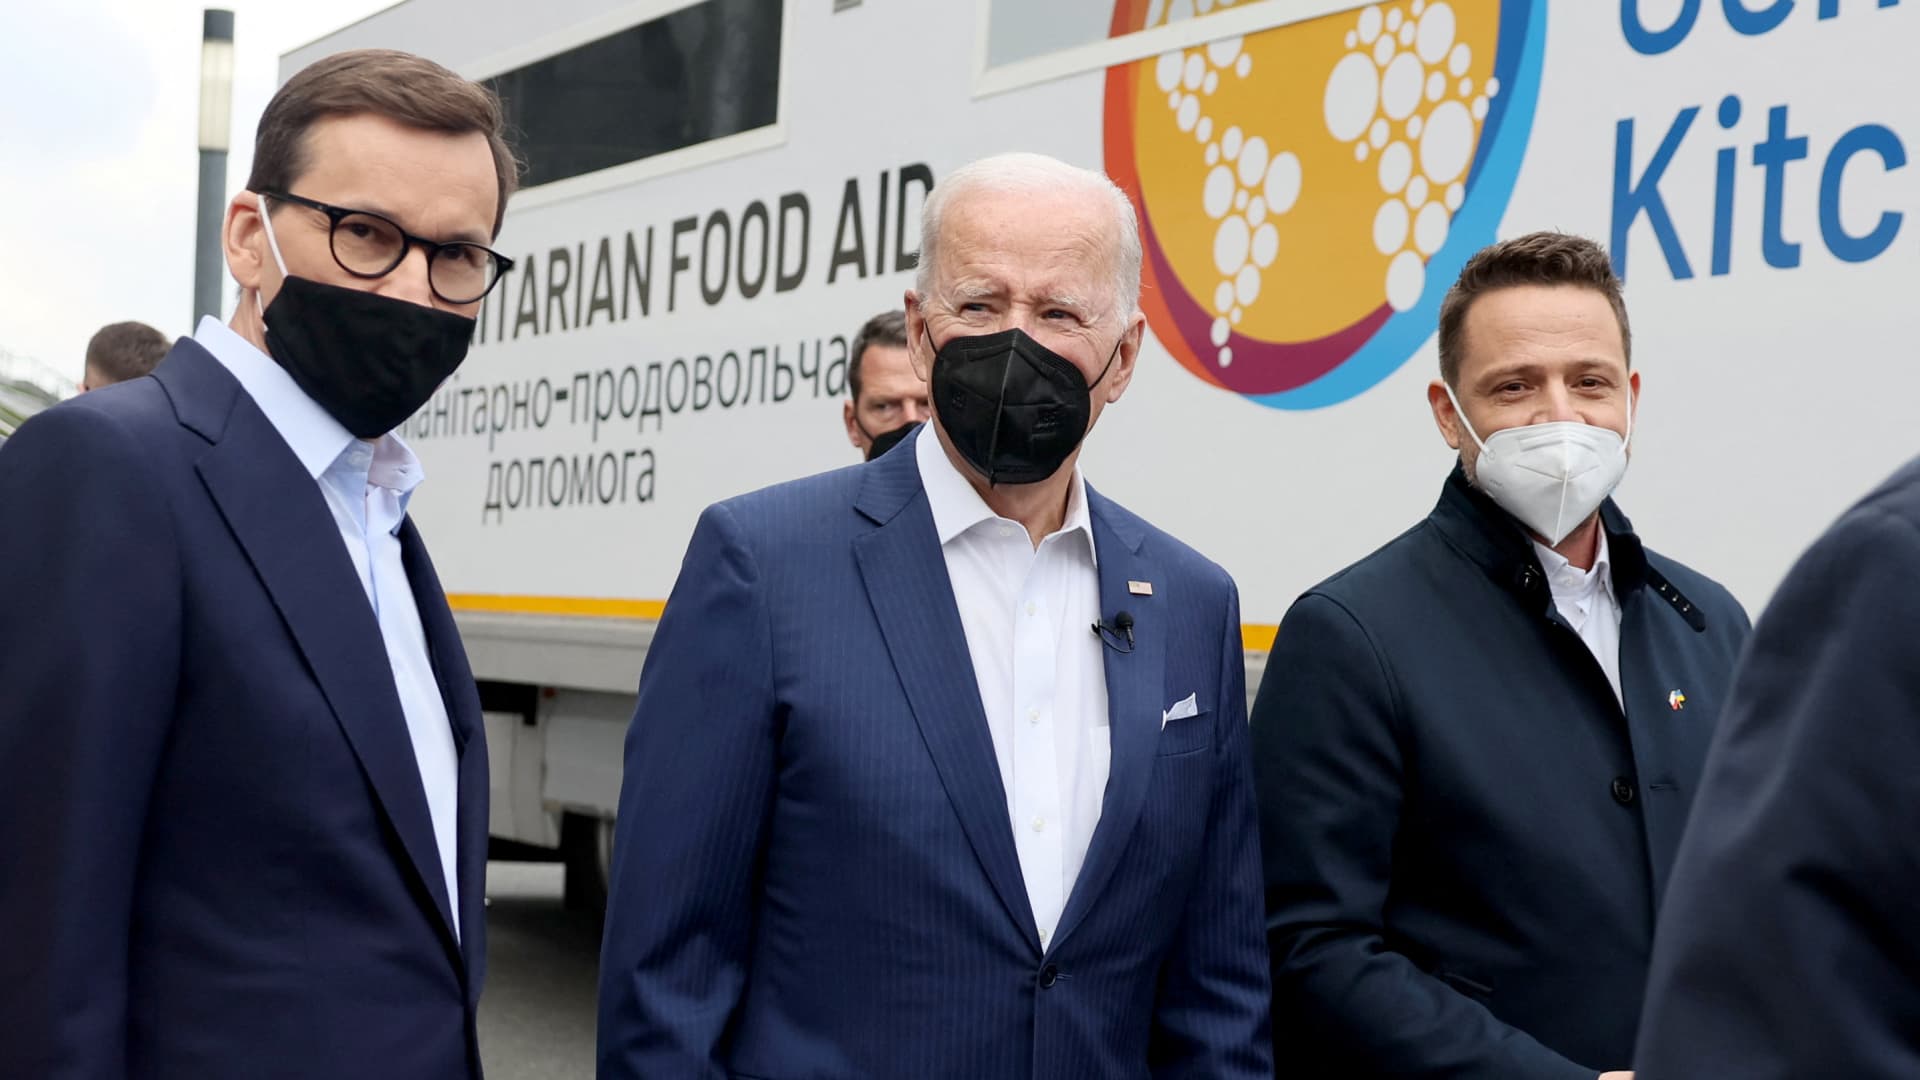 President Joe Biden, flanked by Mayor of Warsaw Rafal Trzaskowski and Polish Prime Minister Mateusz Morawiecki, visits Ukrainian refugees at PGE National Stadium, in Warsaw, Poland March 26, 2022.